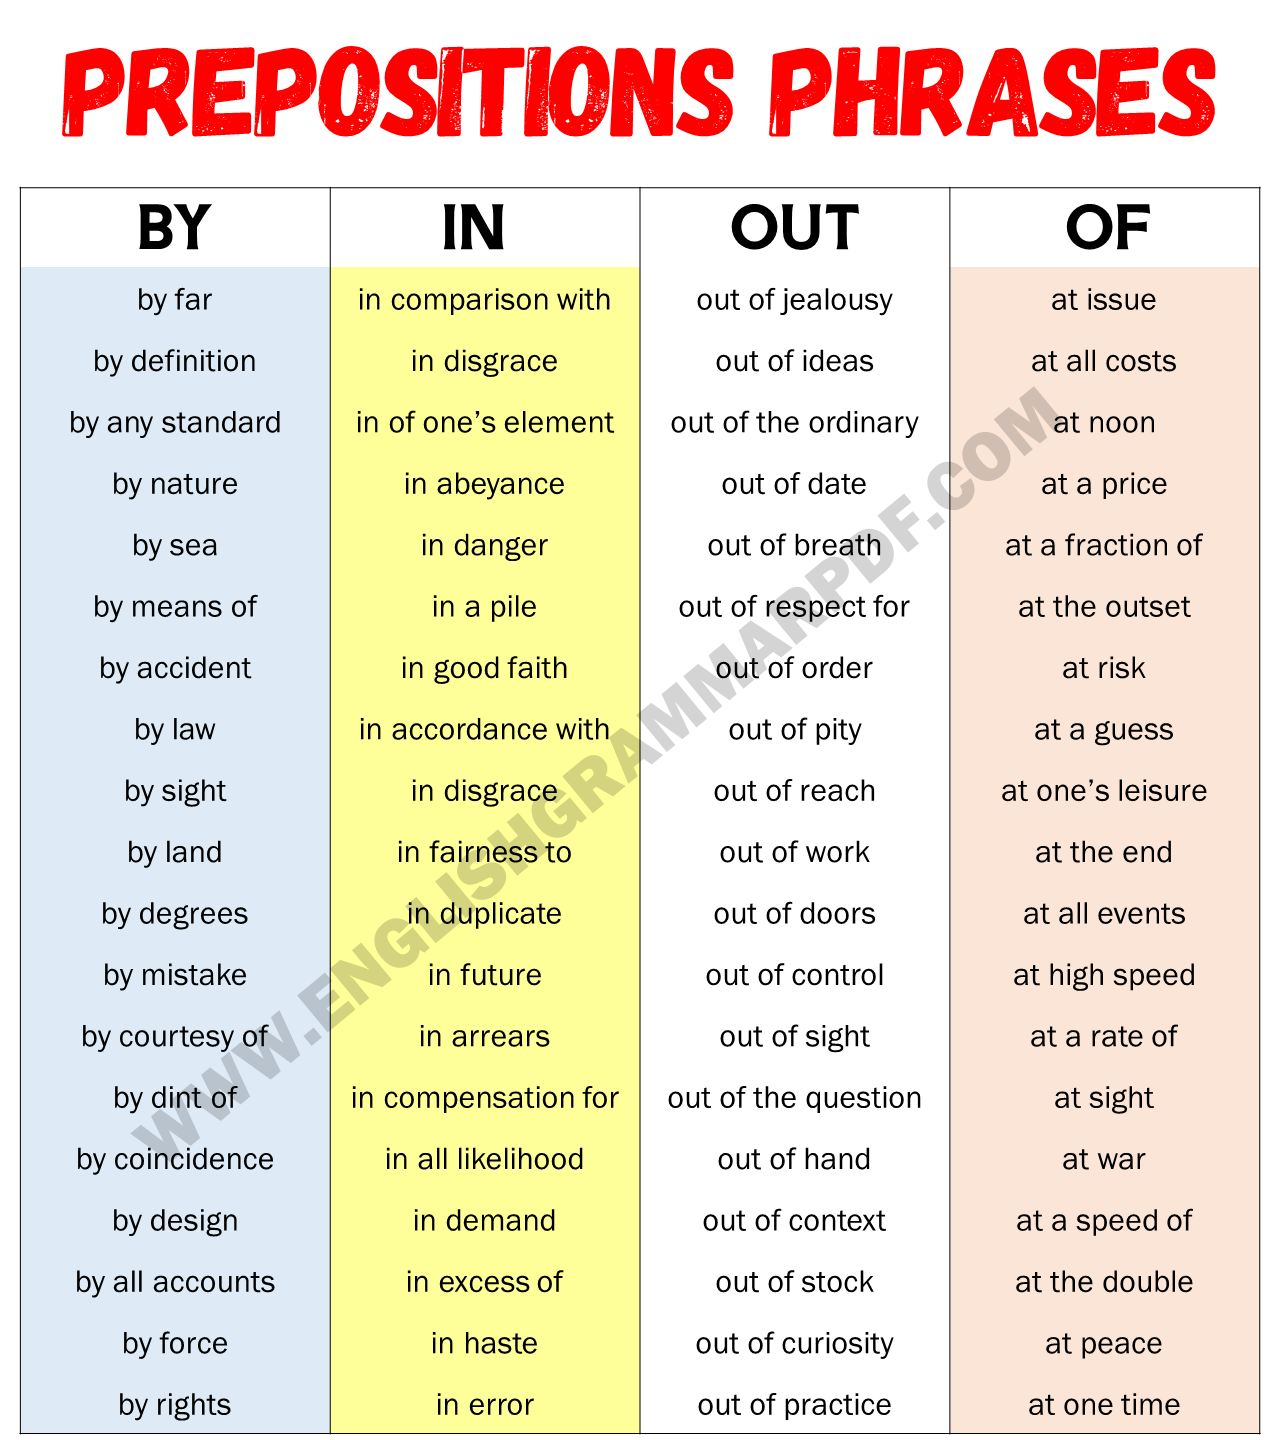 Prepositions Phrases